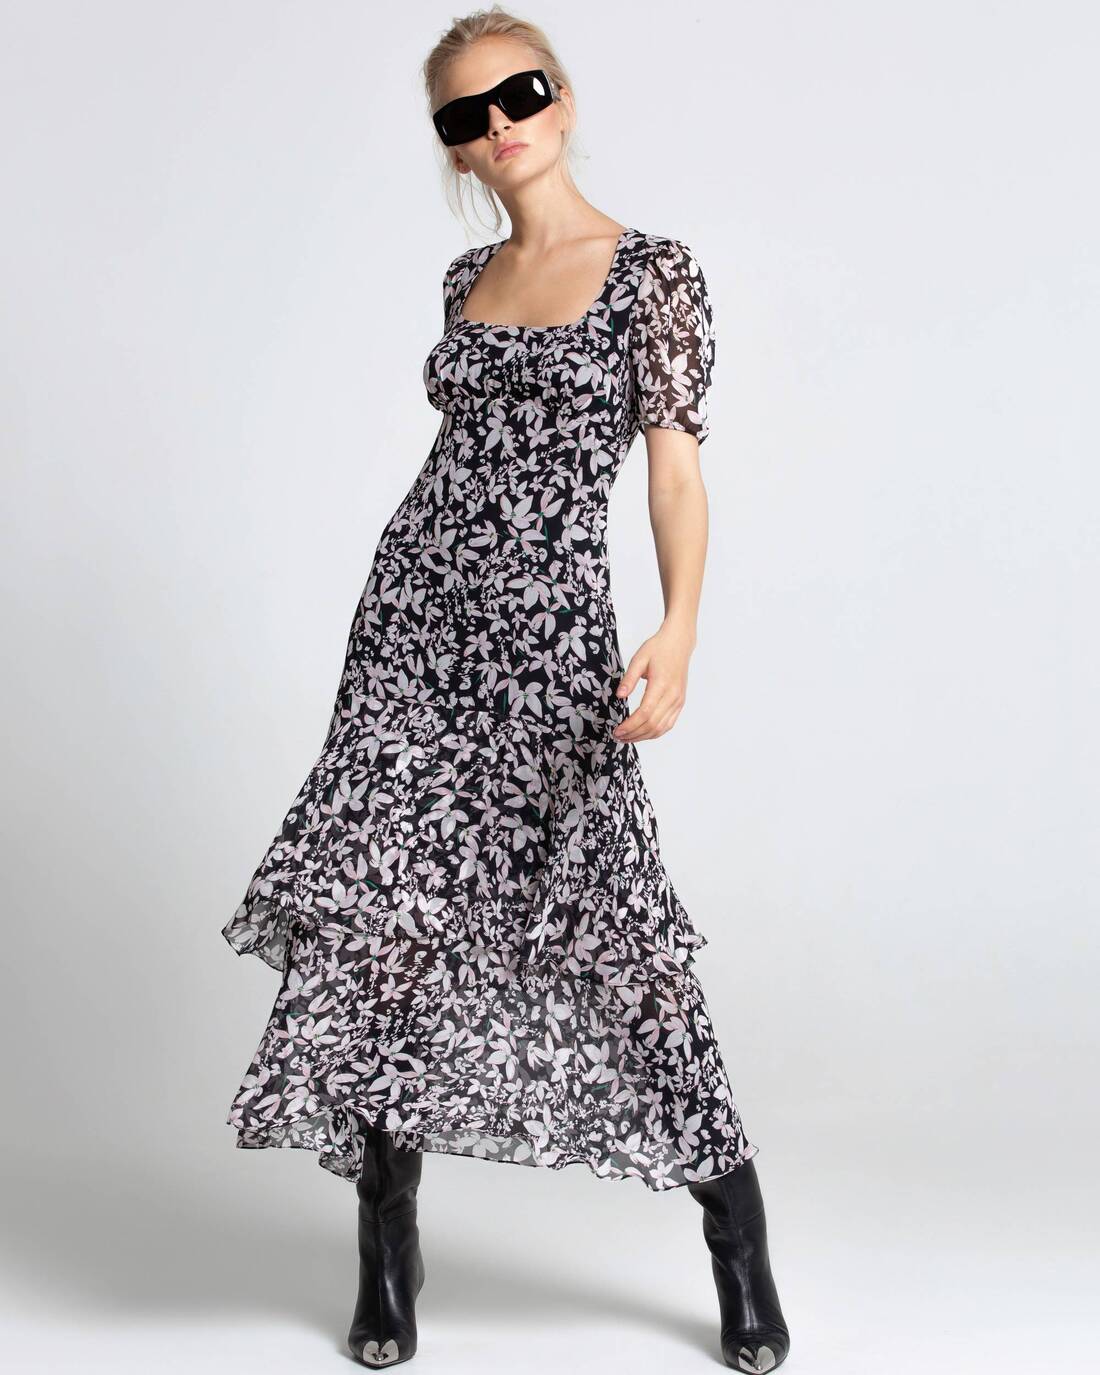 Floral print chiffon tea style dress